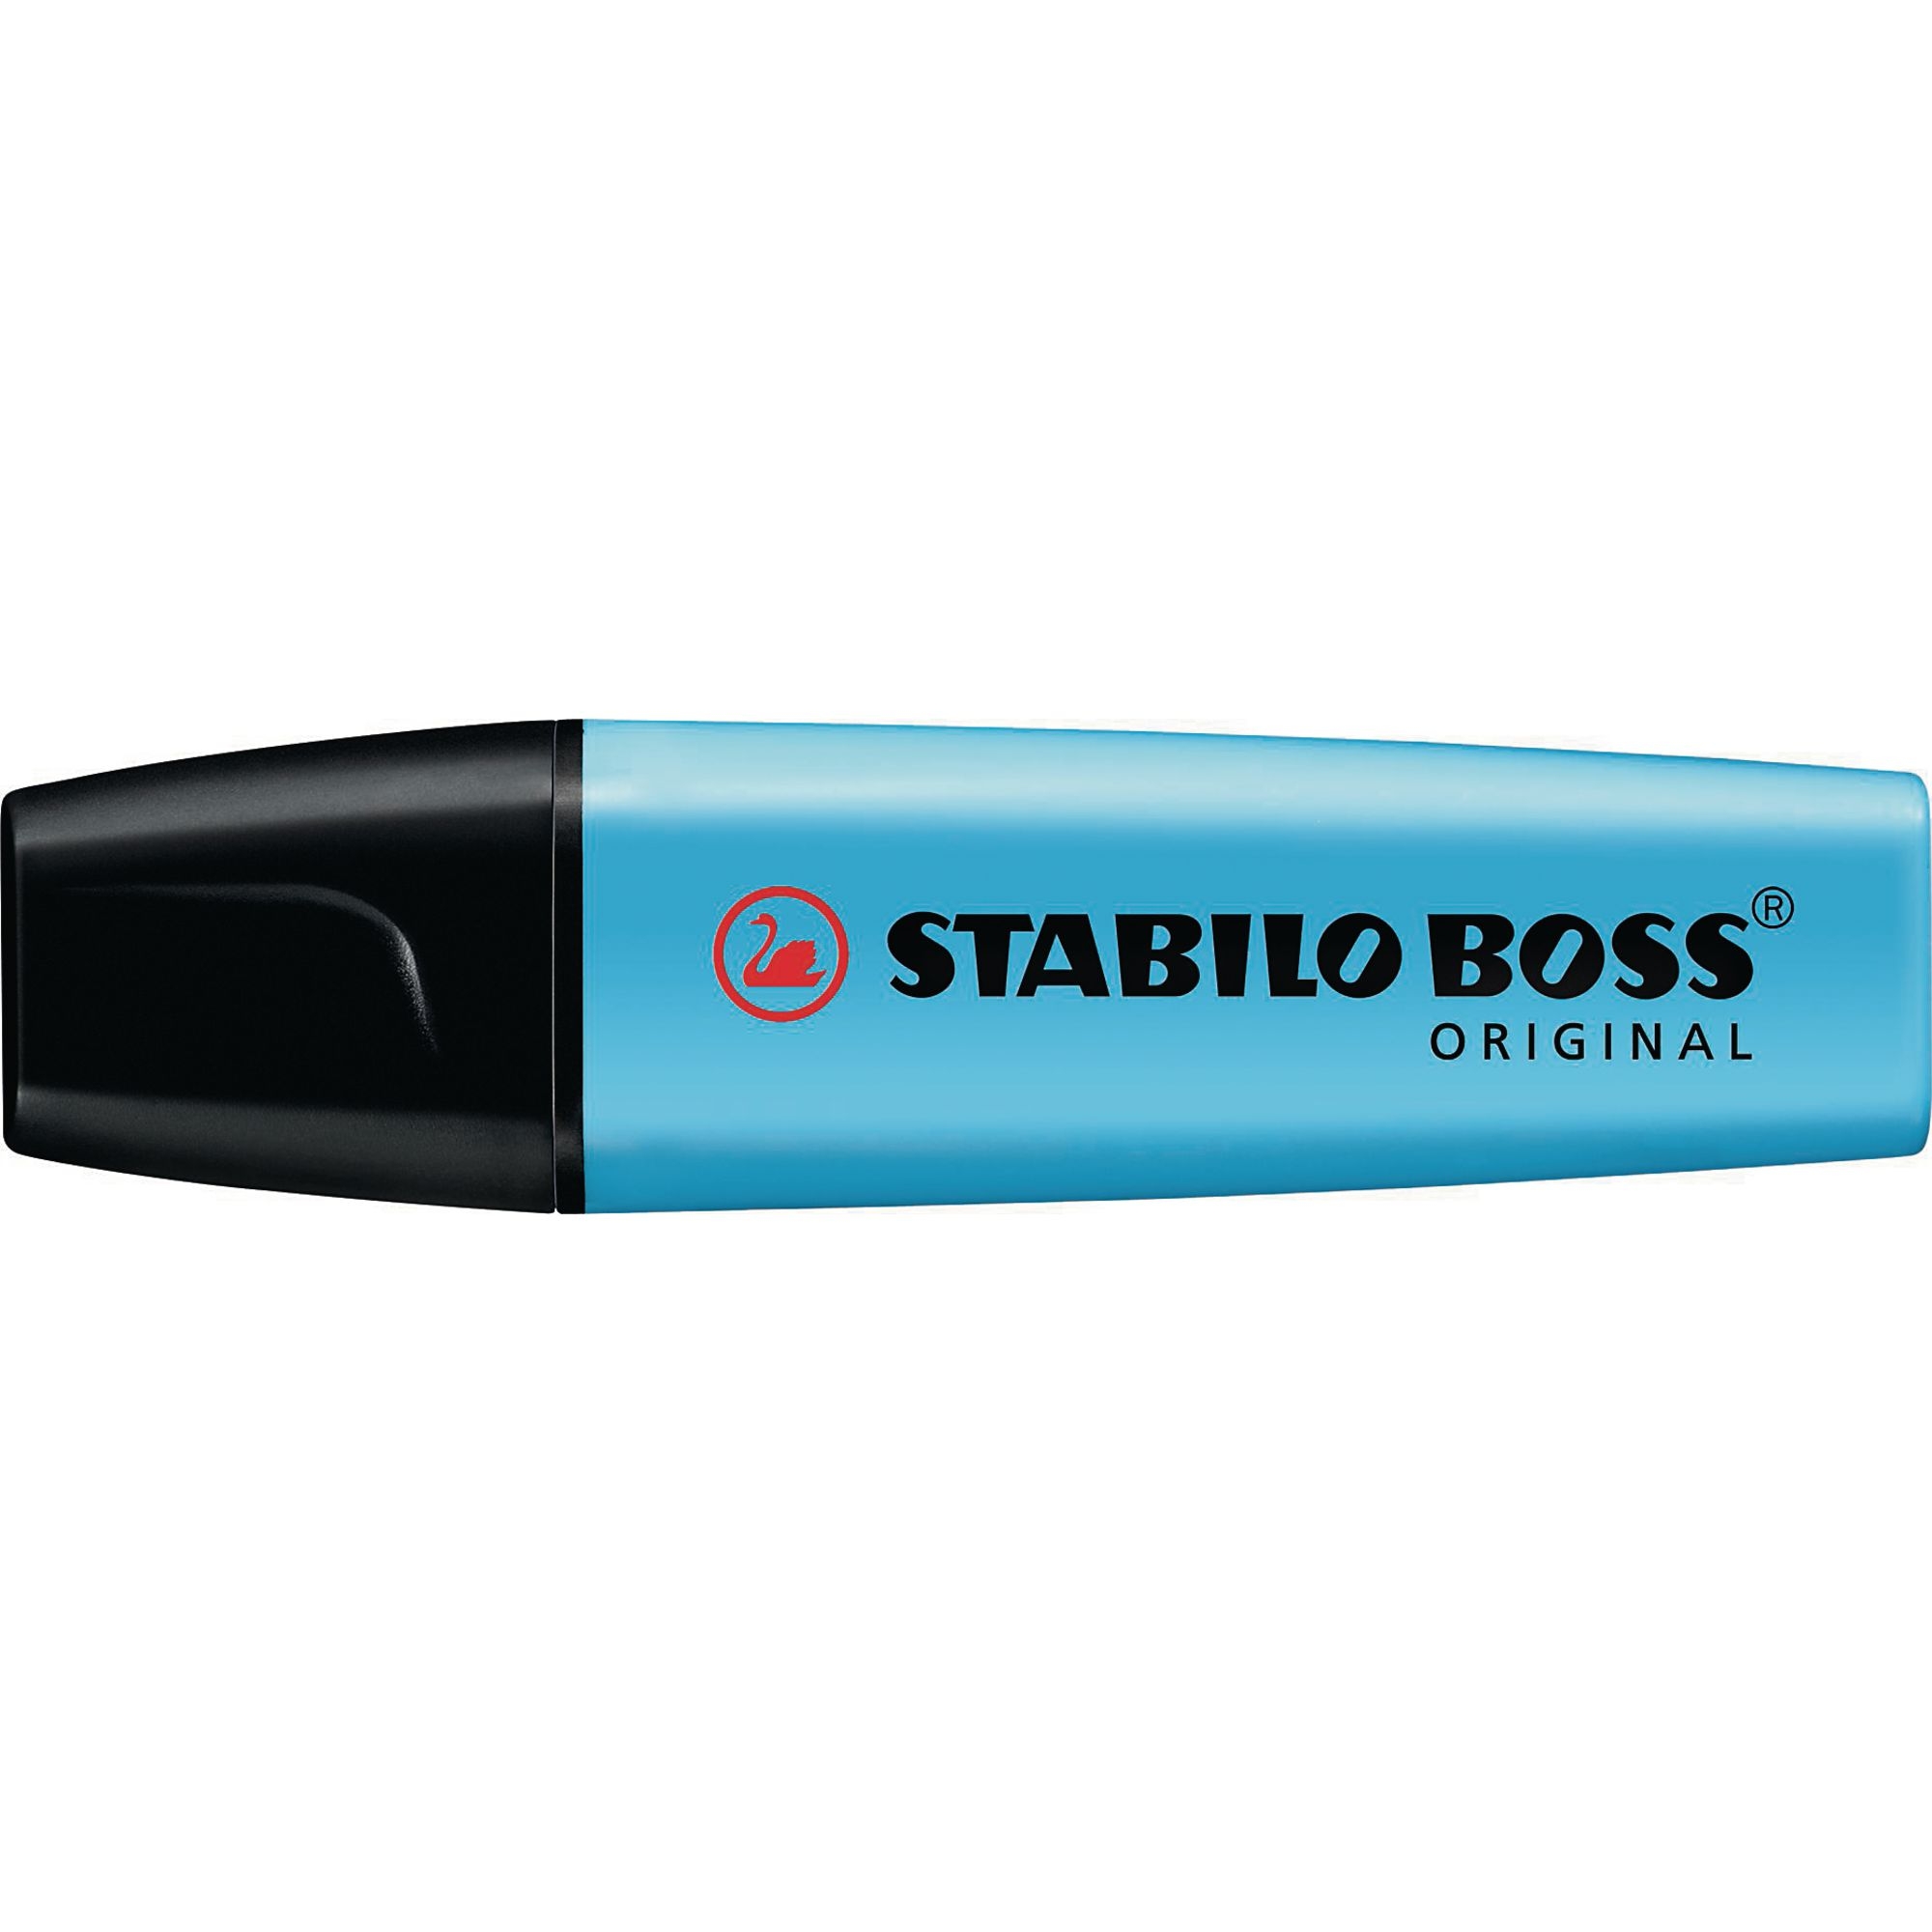 Stabilo Boss Original Highlighter Blue - Pack of 10